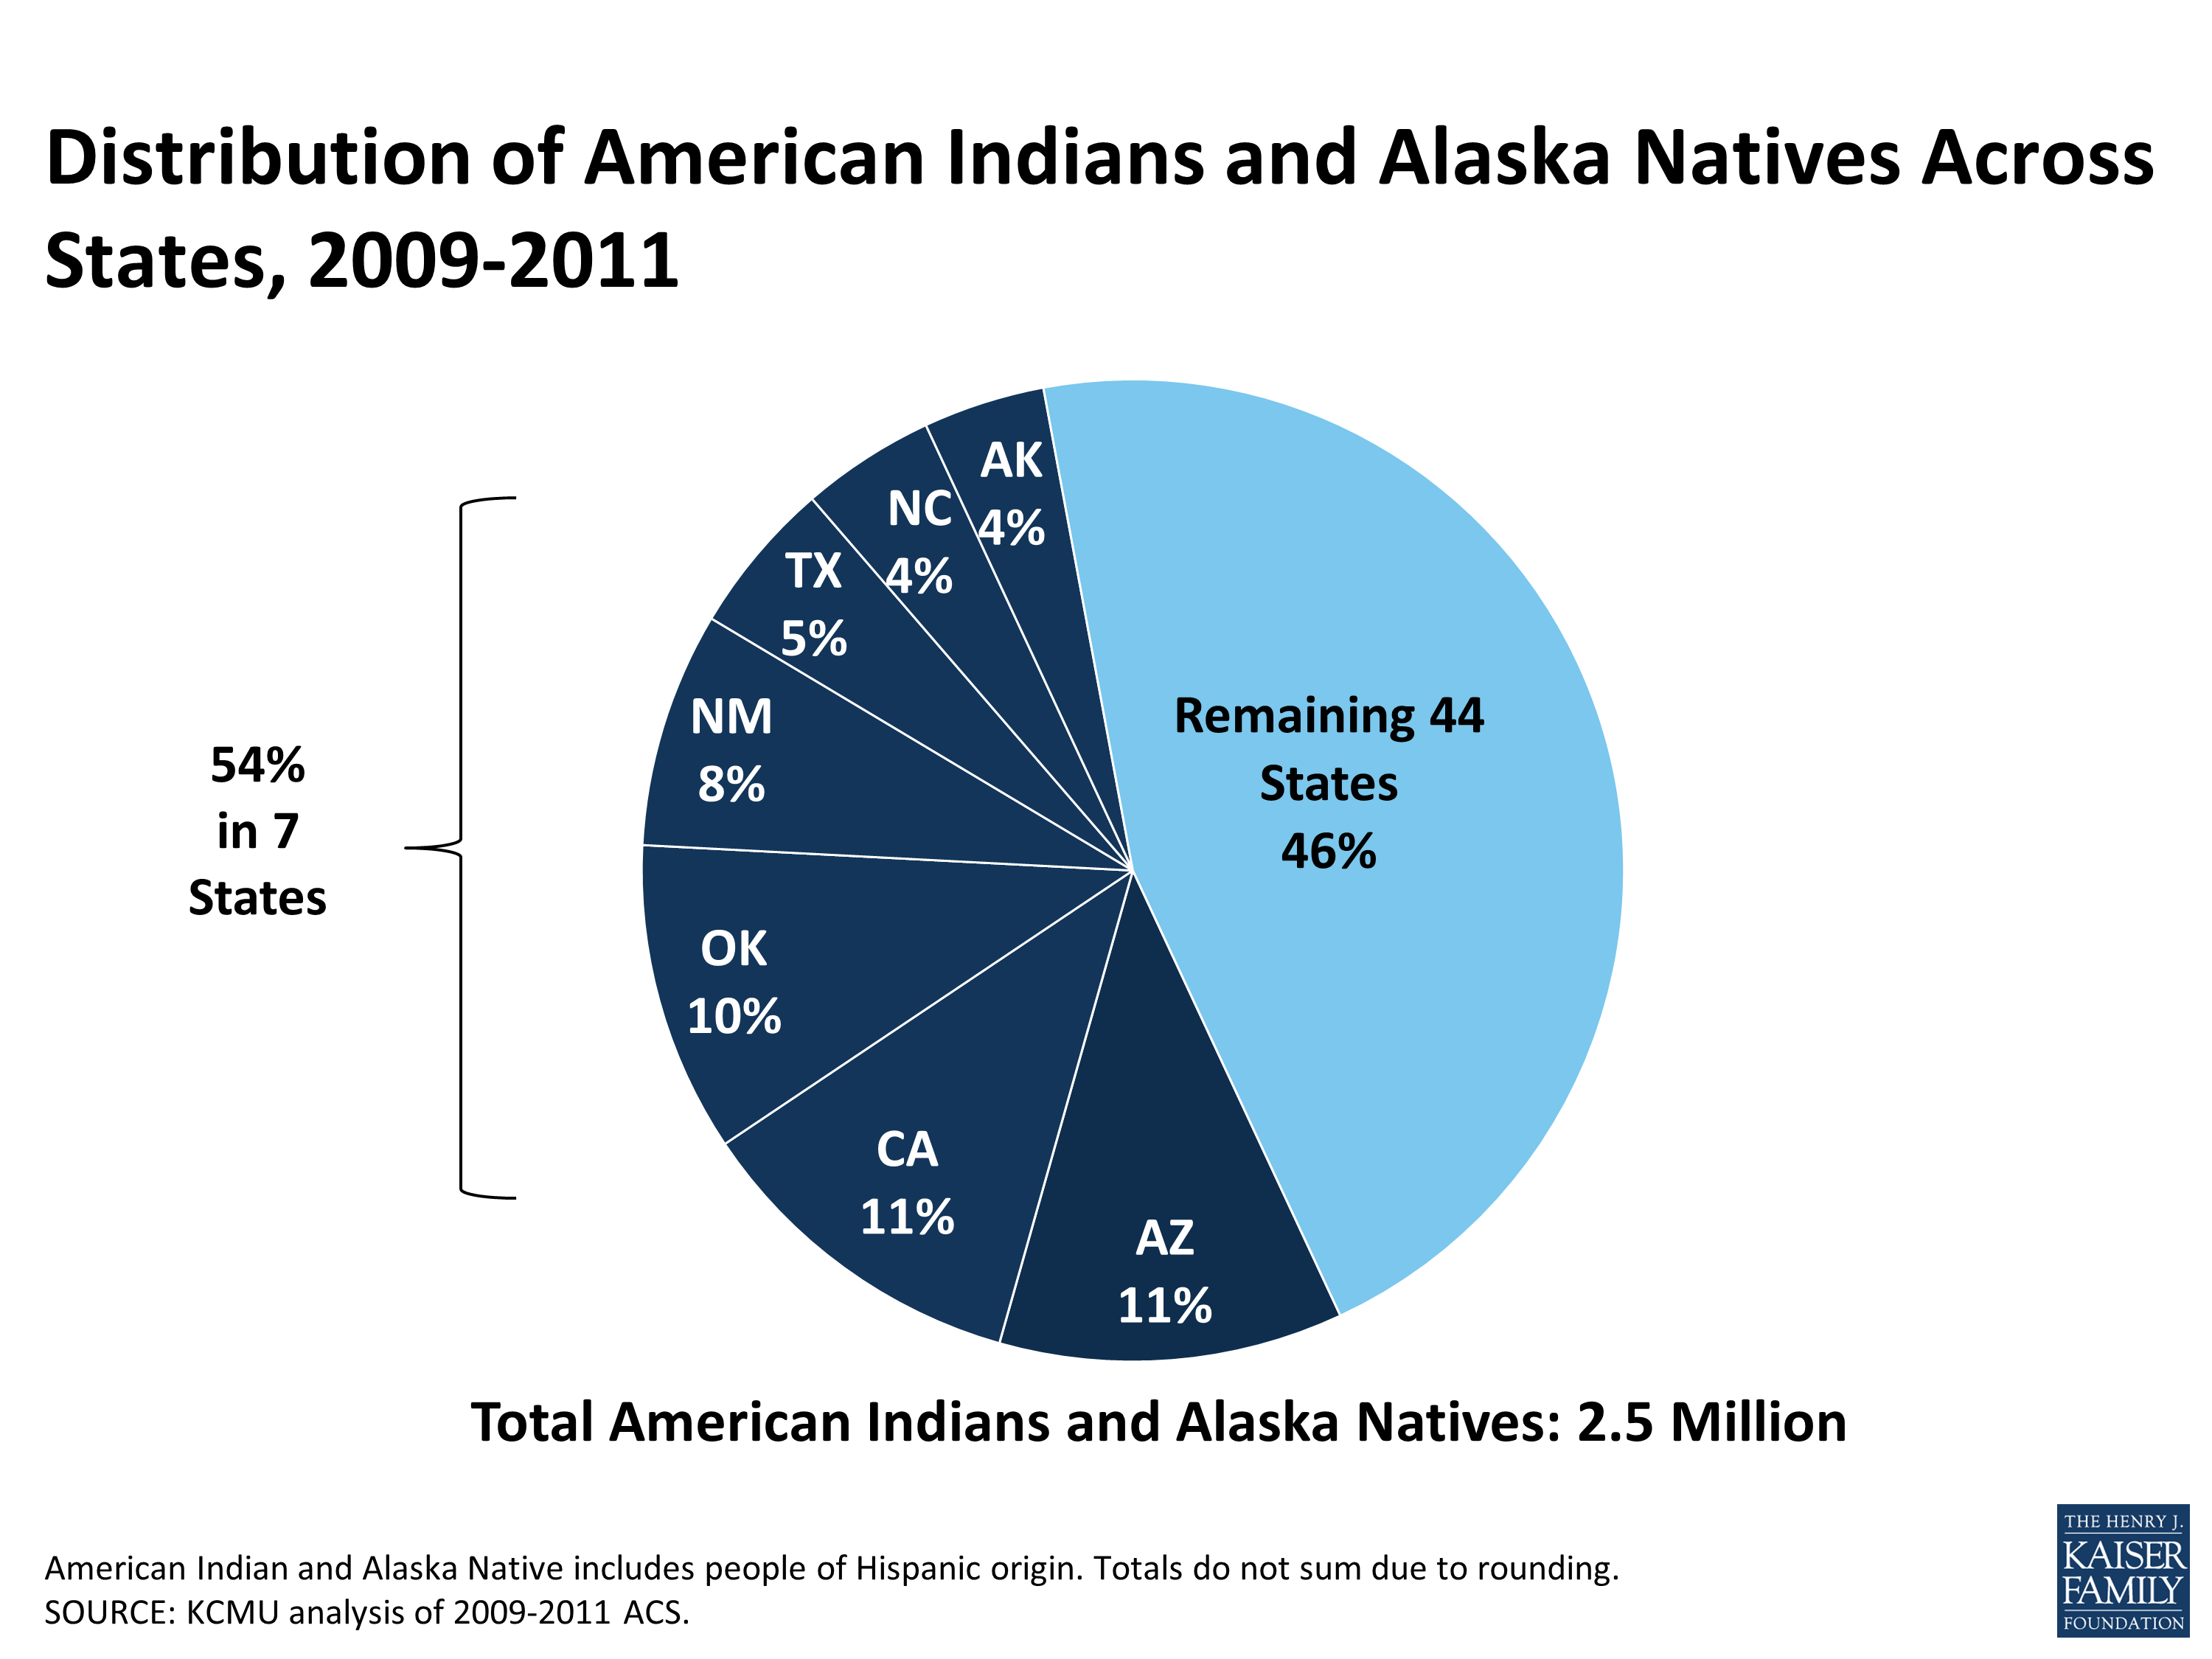 Comparison Chart Native American Tribes